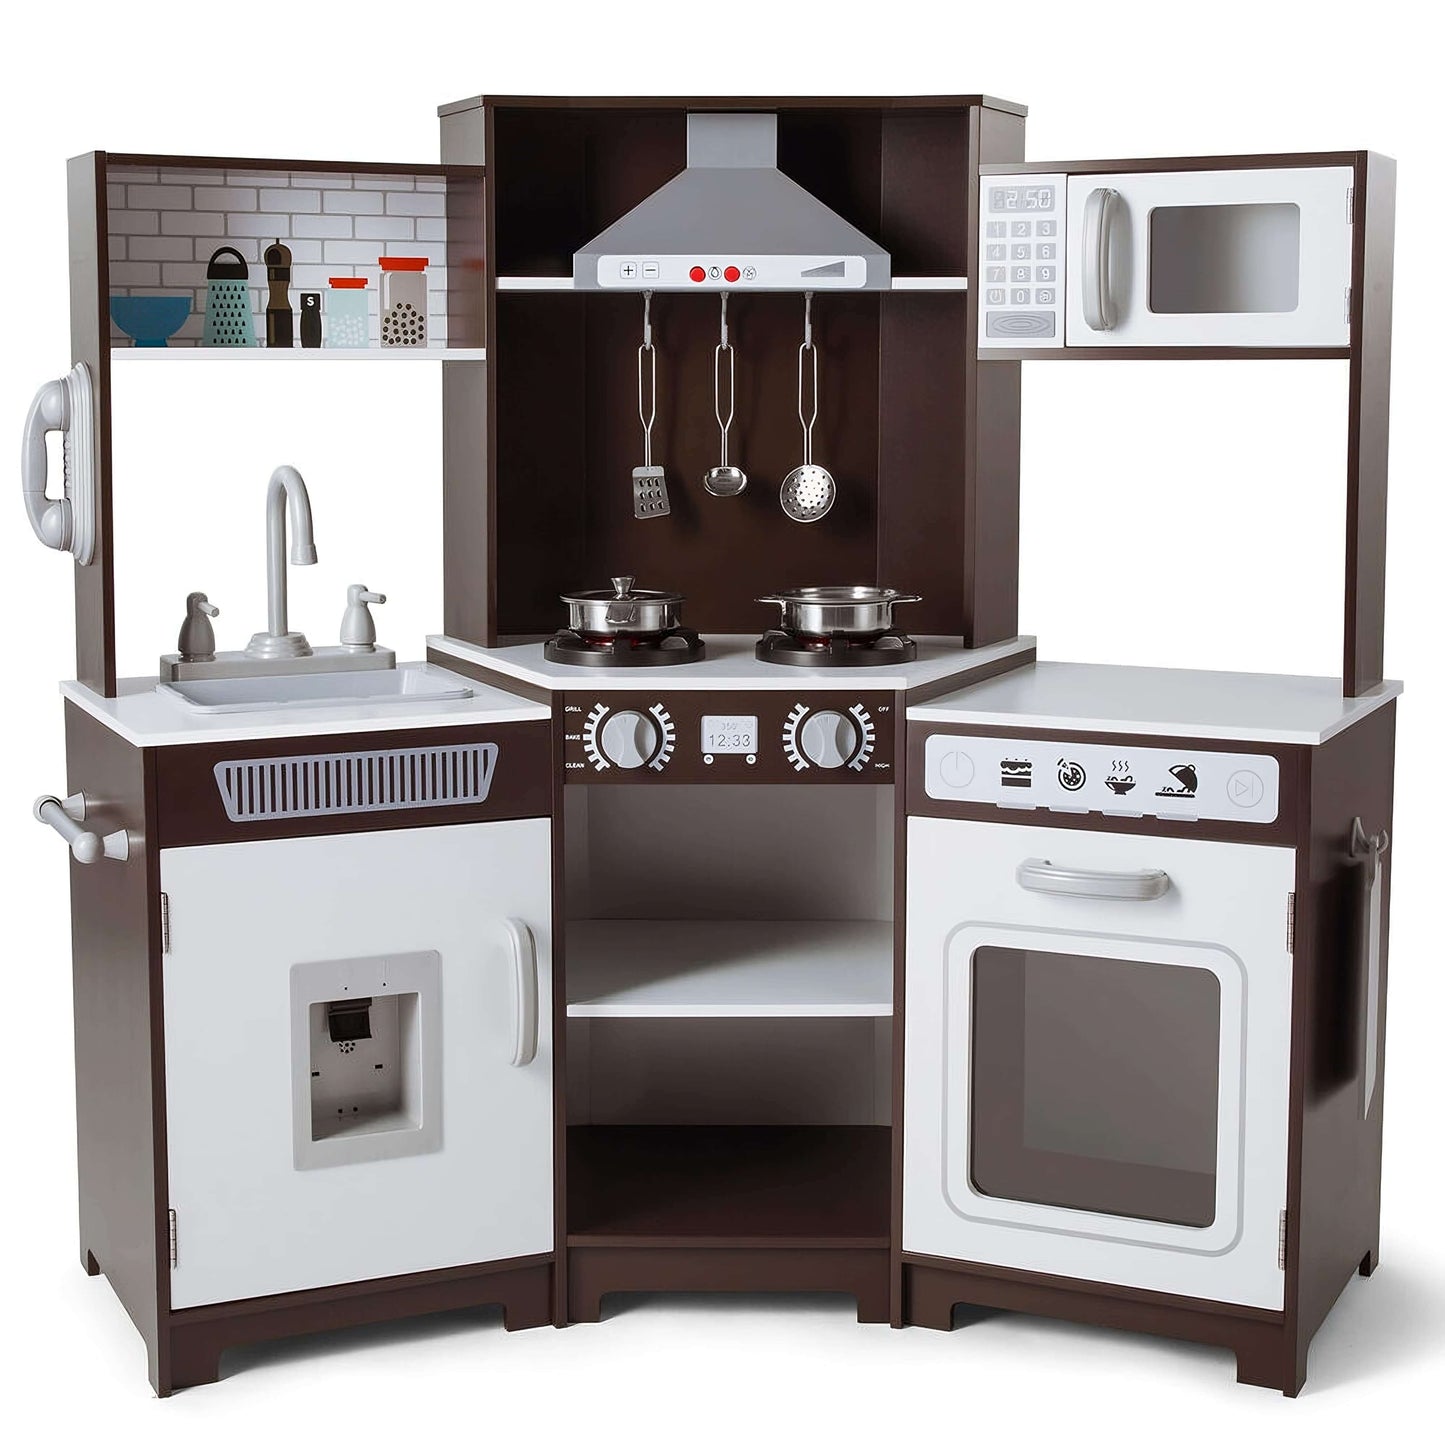 Outstanding WETA® Kids' Play Kitchen | Wooden Kidkraft Kitchen with Matching Cookware Set